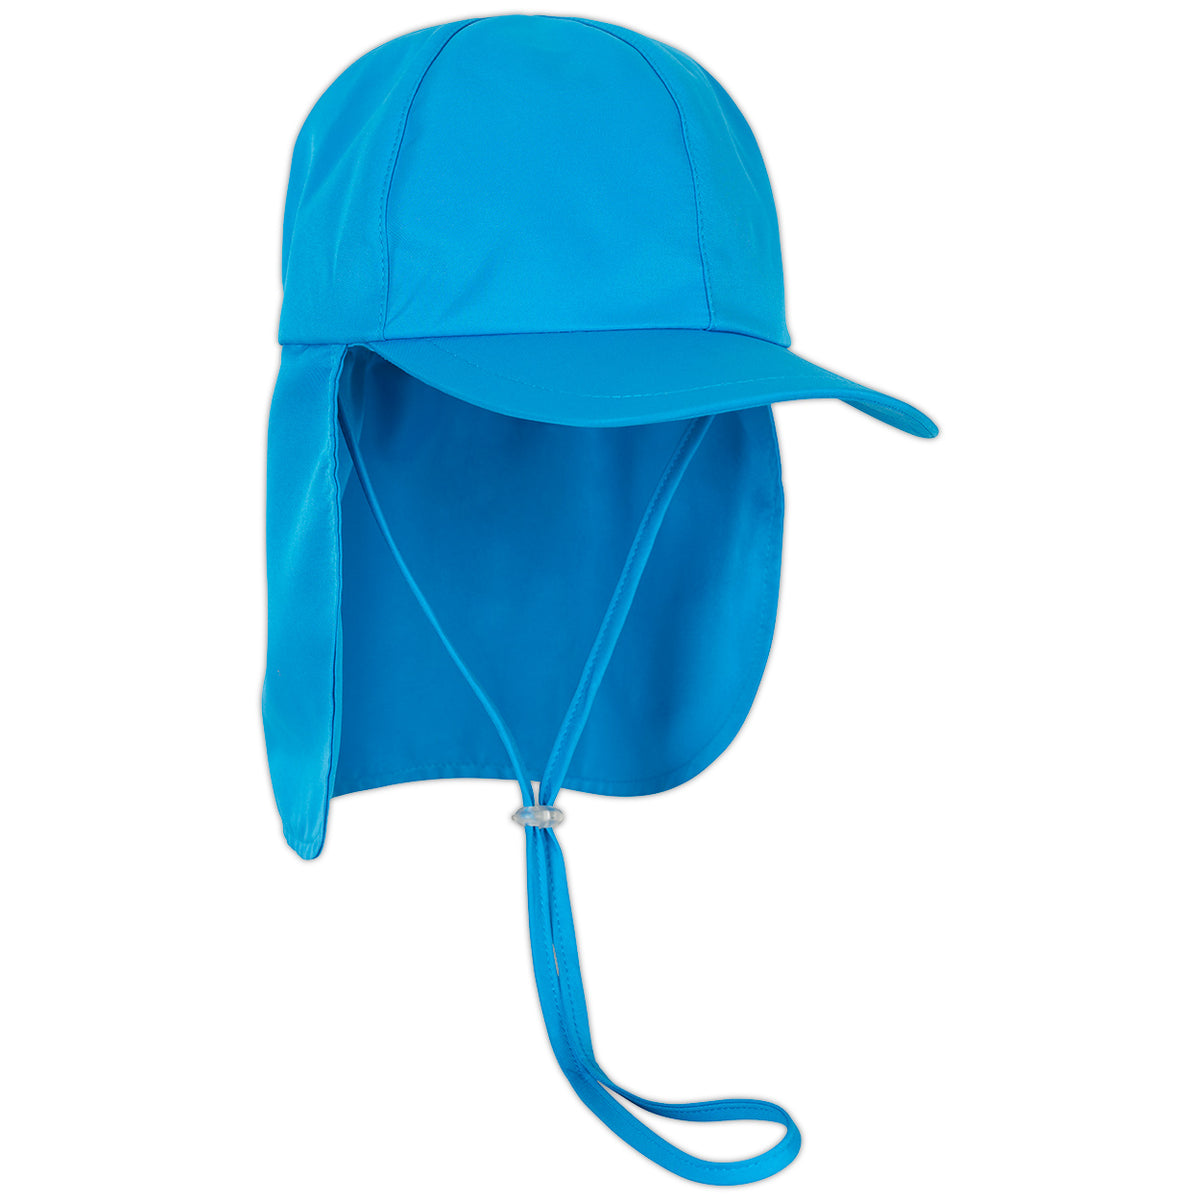 Kids Blue Legionnaire Sun Hat Upf 50 Size S Xl Unisex Boys Girls Blue Right View Sunpoplife